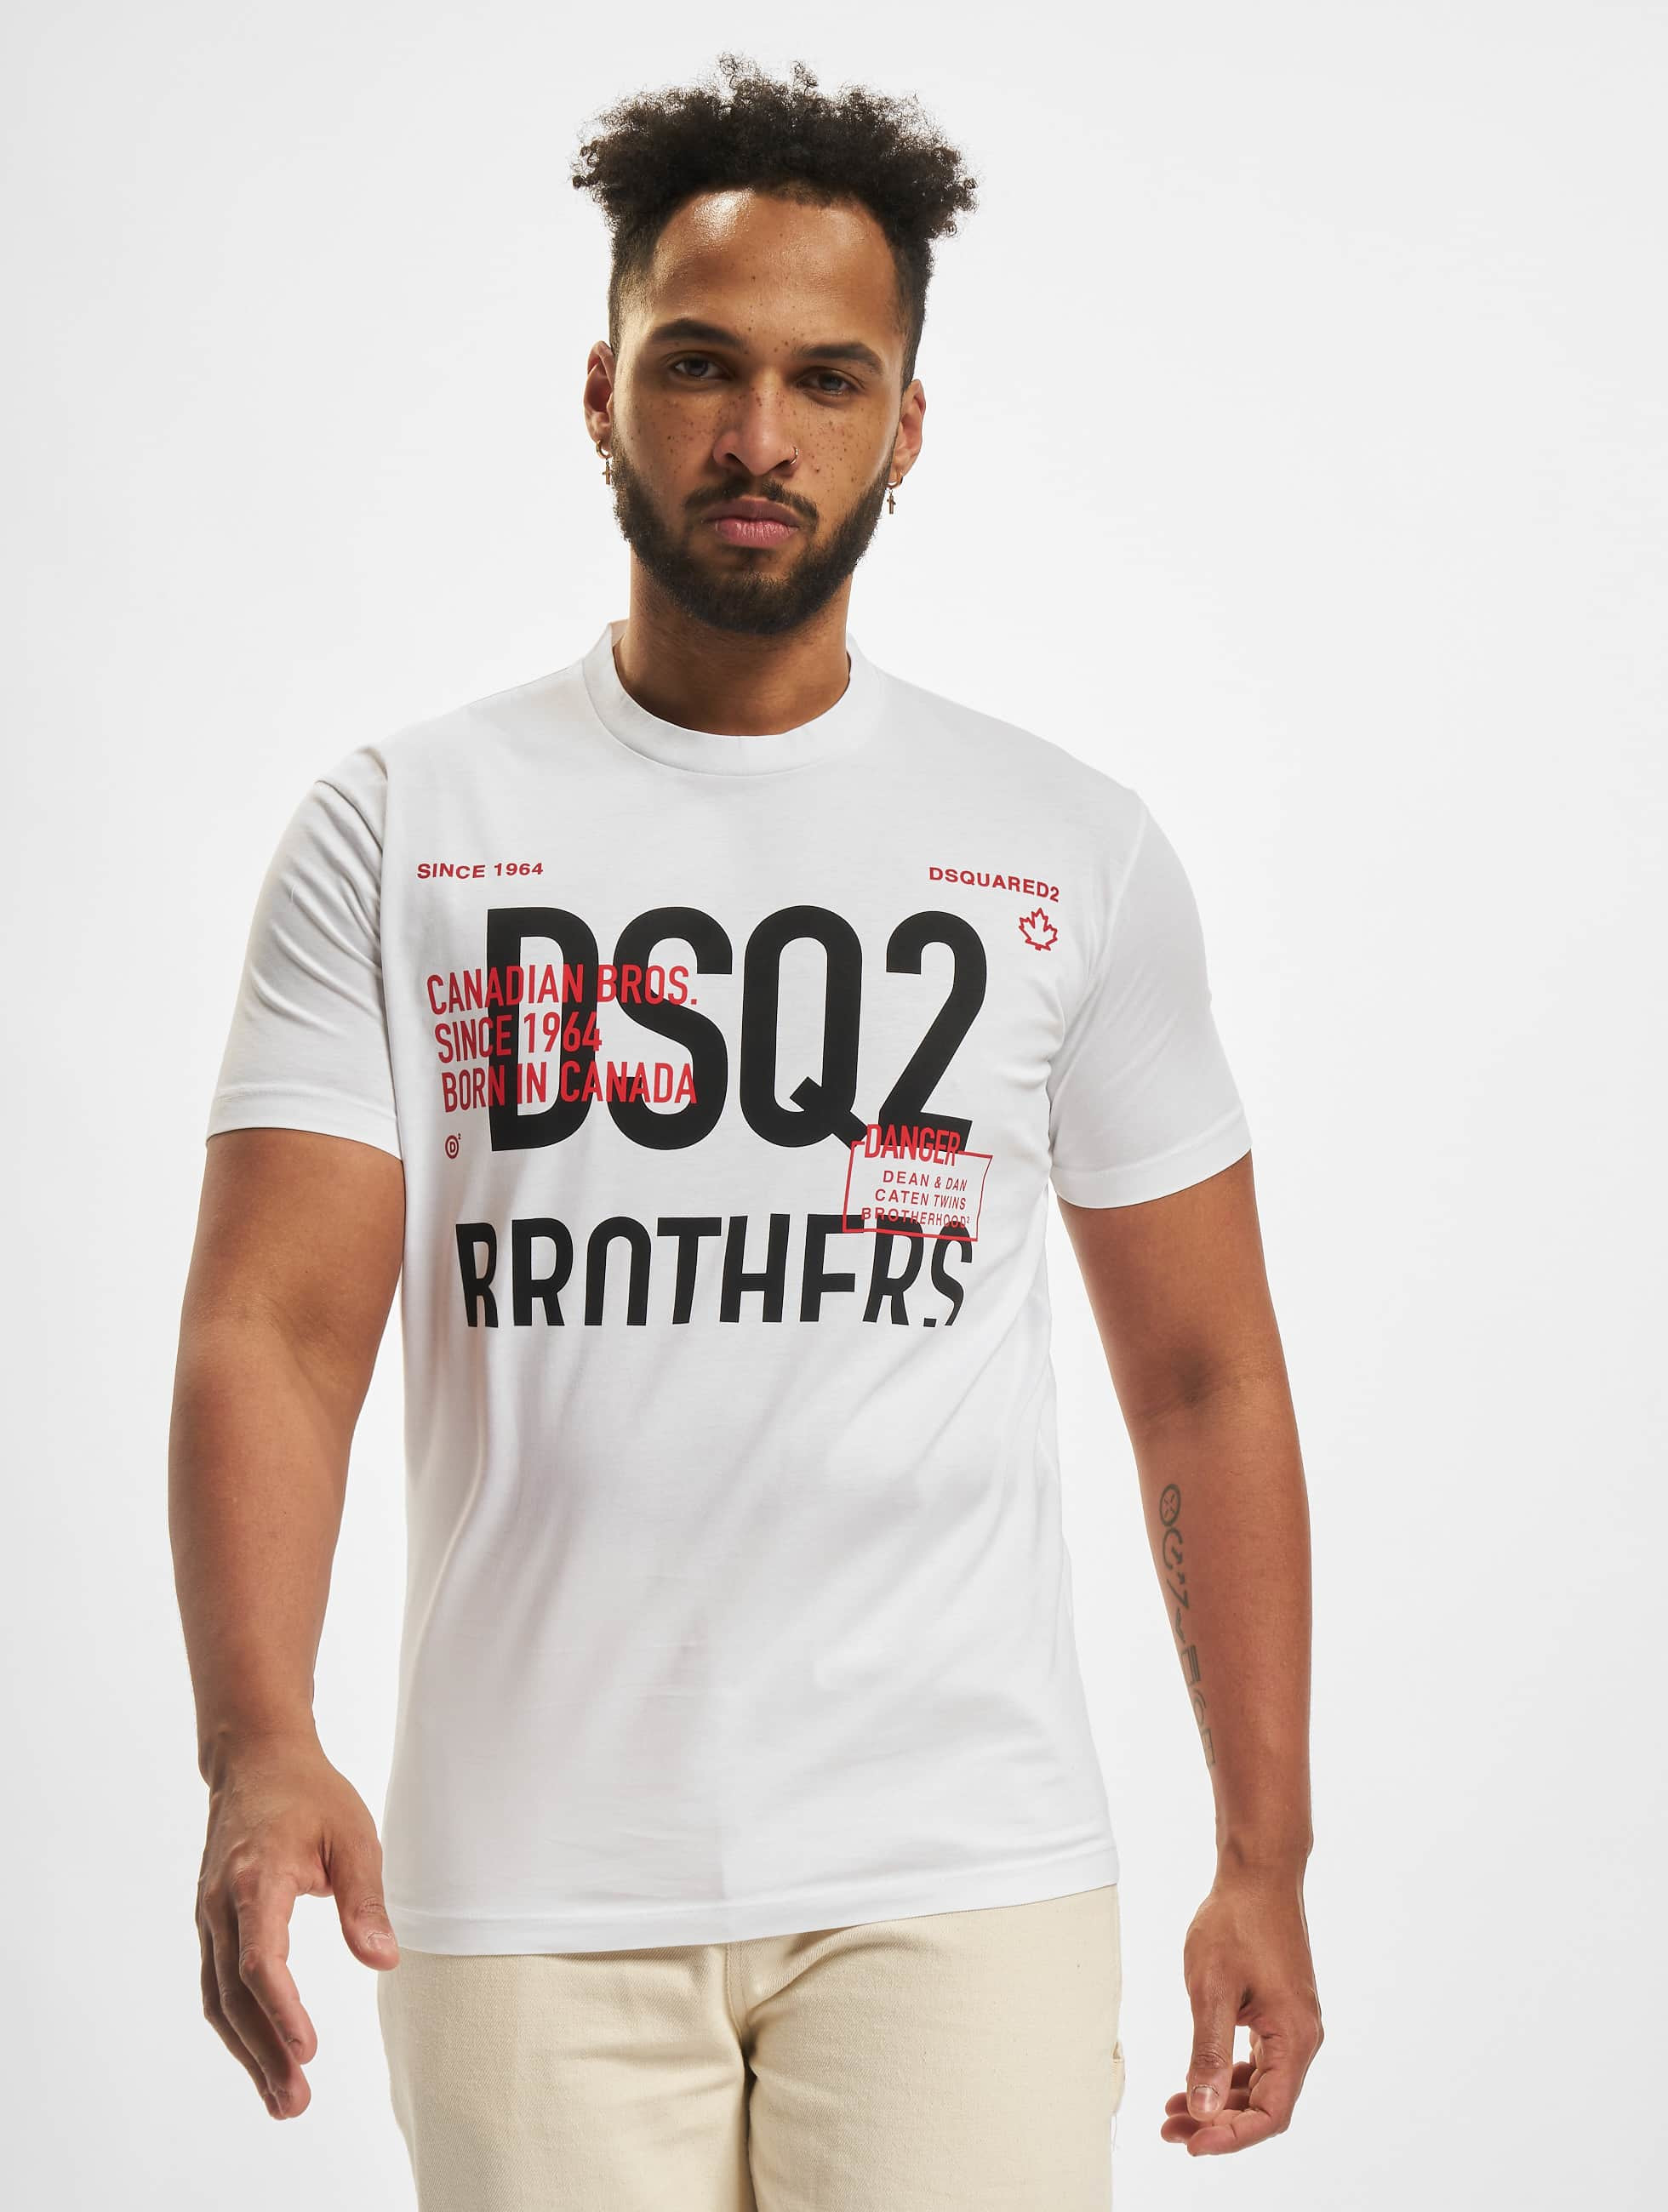 draad Uitputten Mysterieus Dsquared2 bovenstuk / t-shirt Bro Cool in wit 887878